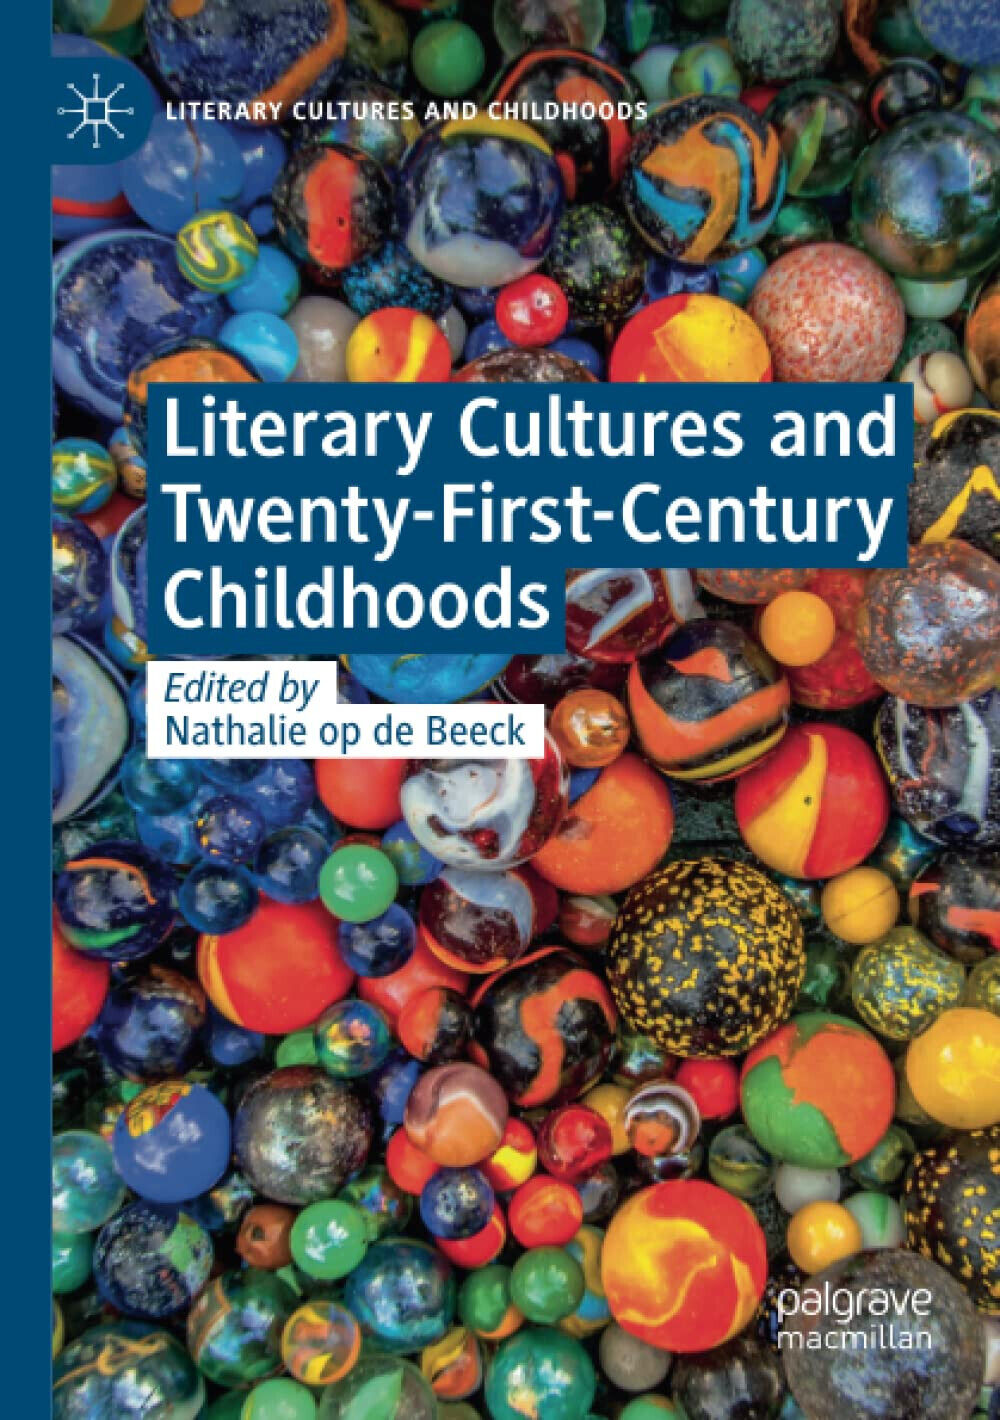 Literary Cultures And Twenty-First-Century Childhoods - Palgrave, 2021 libro usato